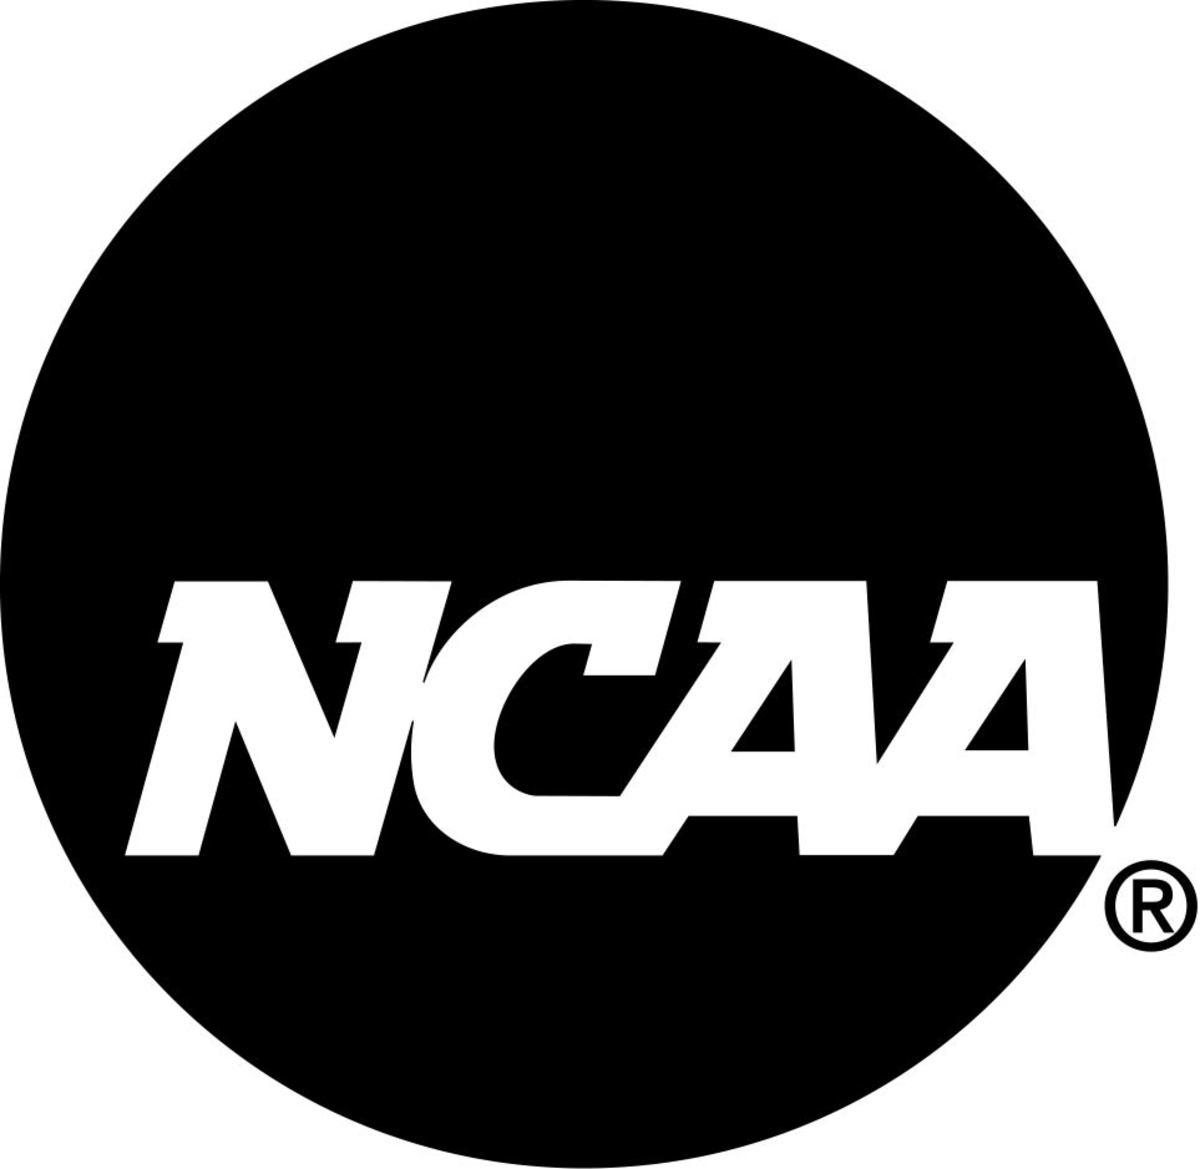 Black NCAA logo